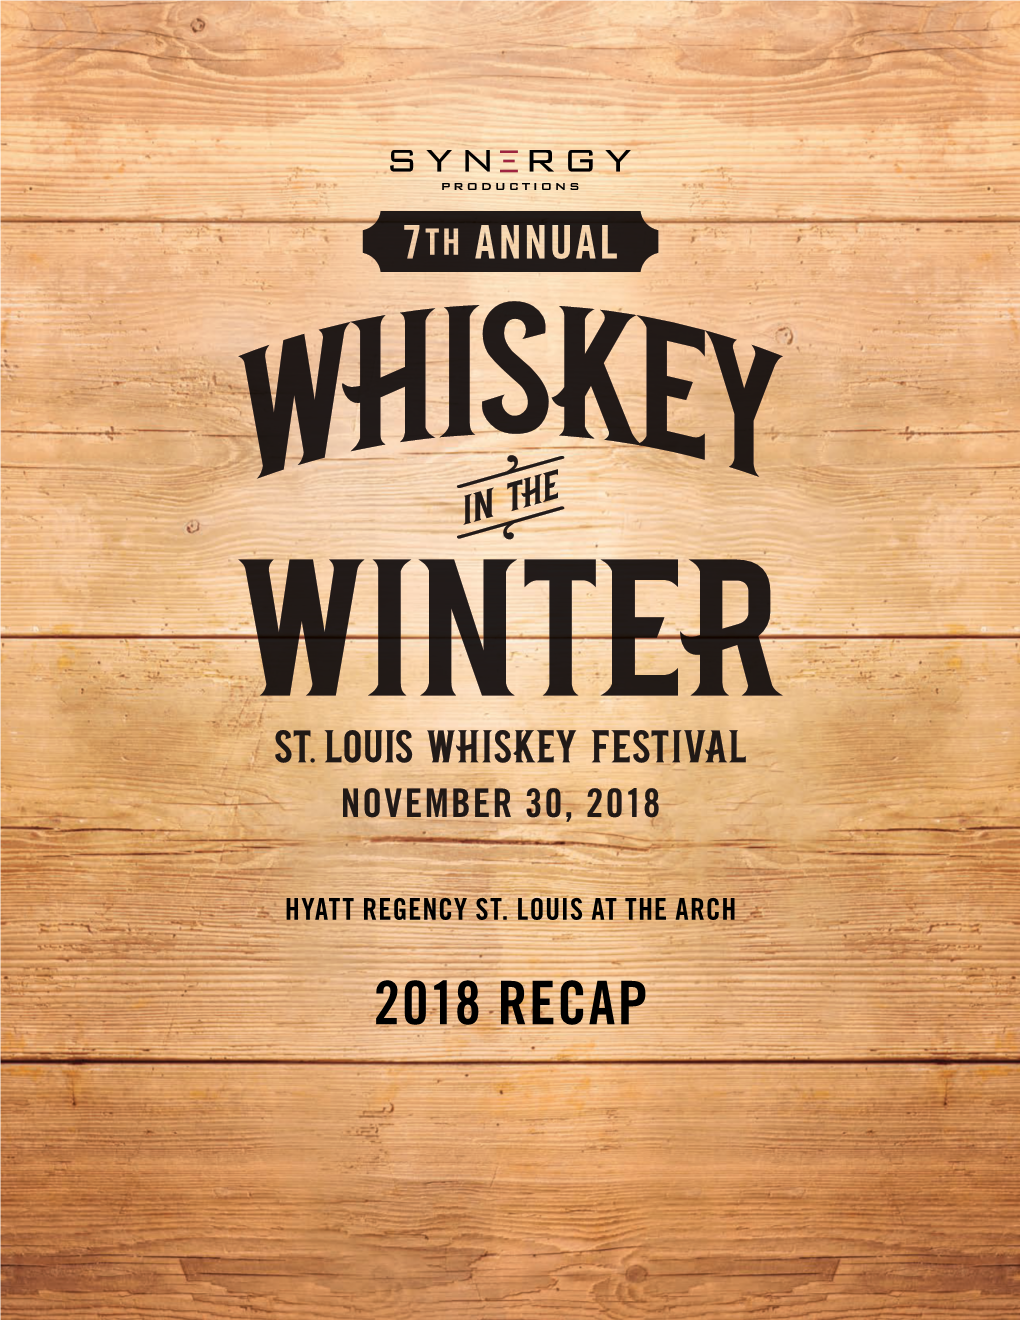 2018 RECAP OVERVIEW the Seventh Annual Whiskey in the Winter Festival Took Place on November 30, 2018 at the Hyatt Regency St